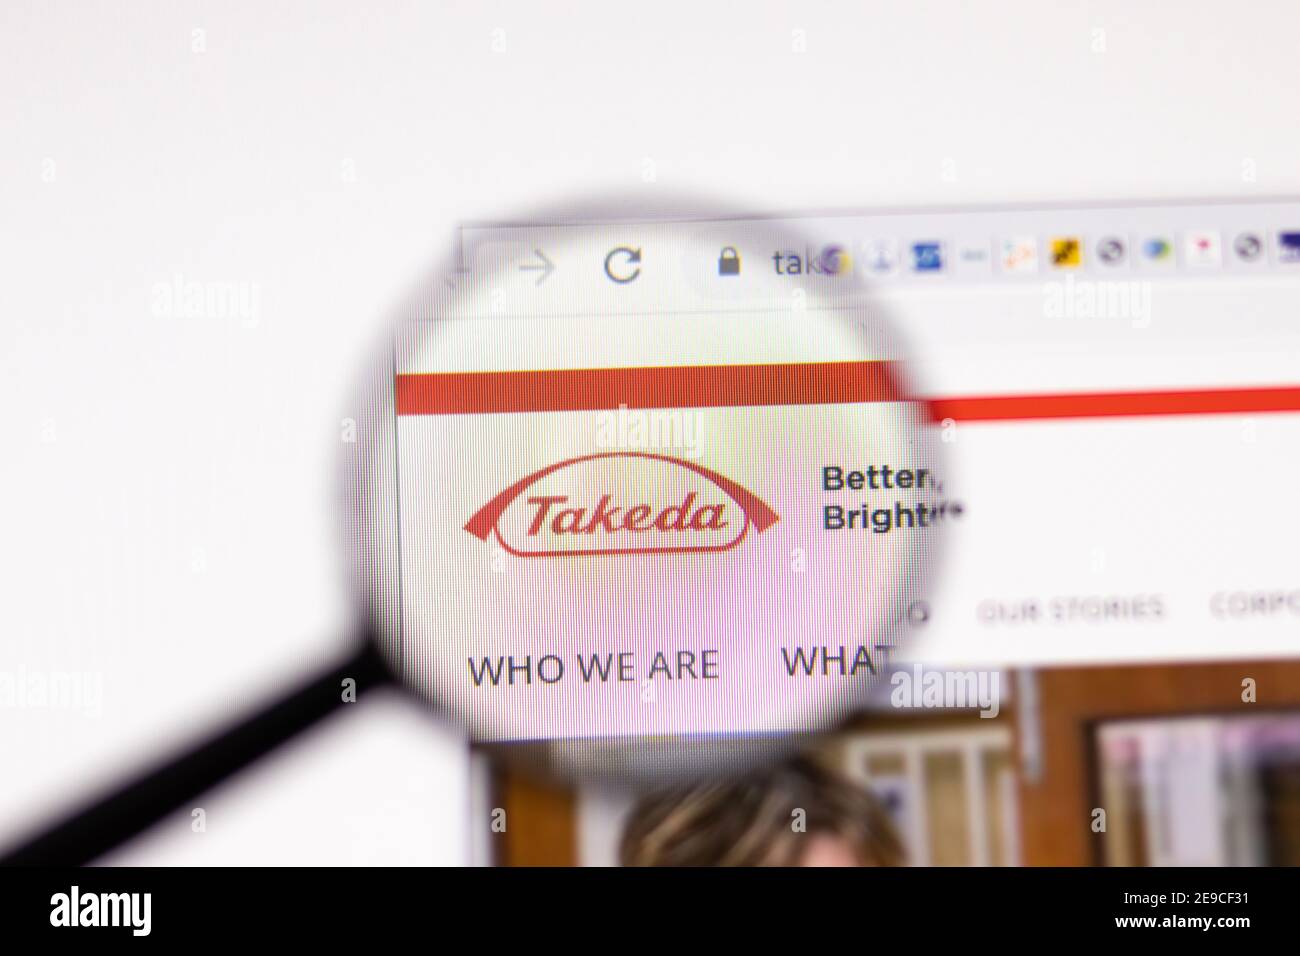 Los Angeles, USA - 1 febbraio 2021: Pagina web Takeda Pharmaceutical. Takeda.com logo sullo schermo, editoriale illustrativo Foto Stock